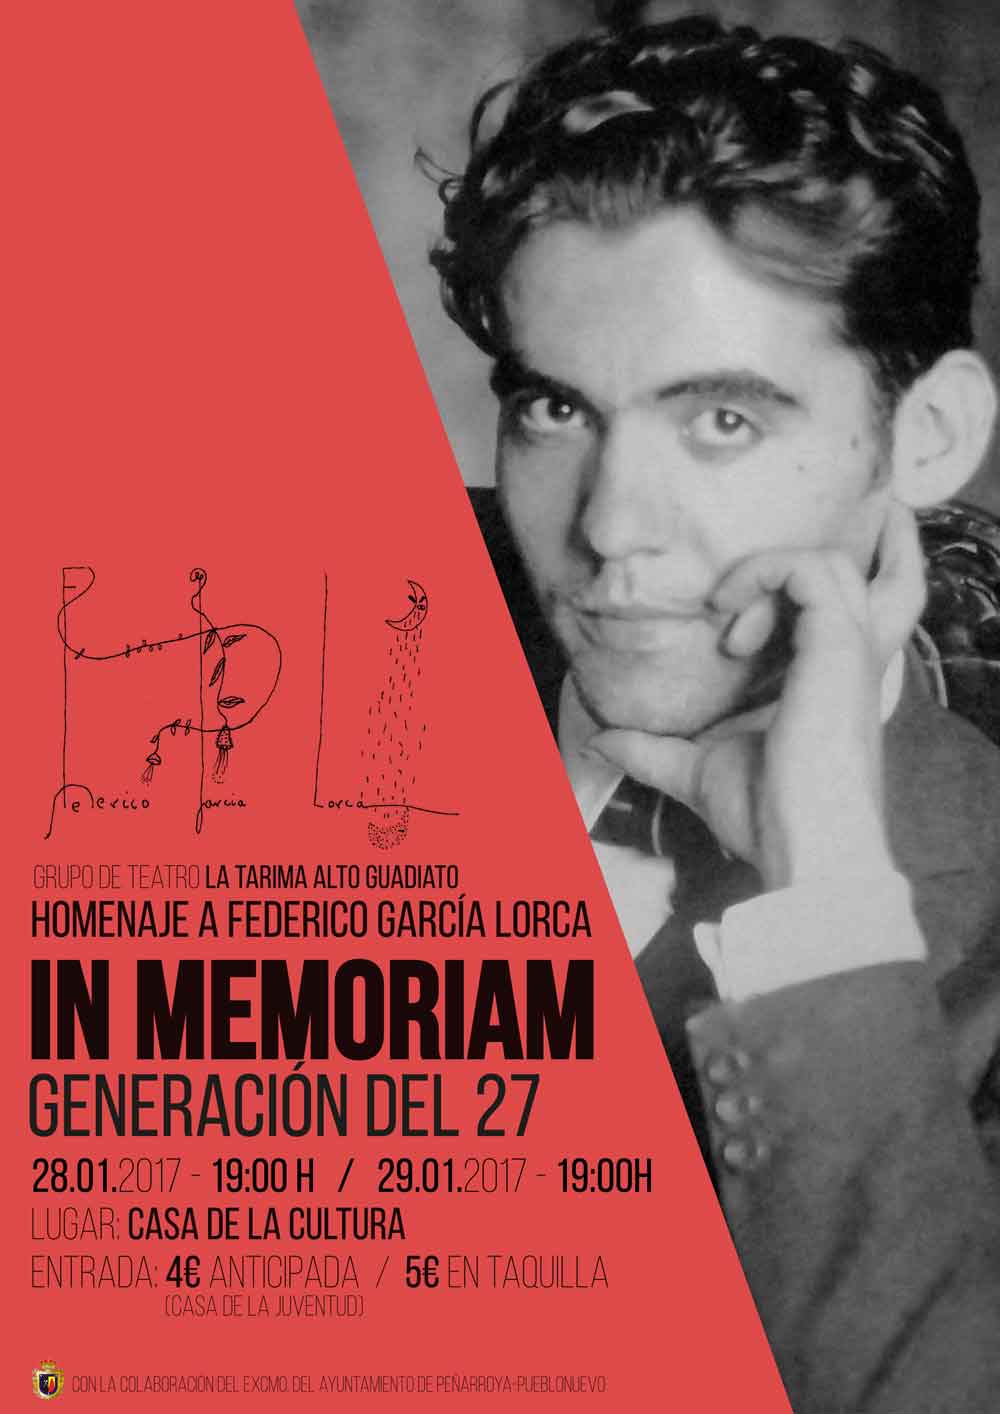 Homenaje a Federico Garca Lorca